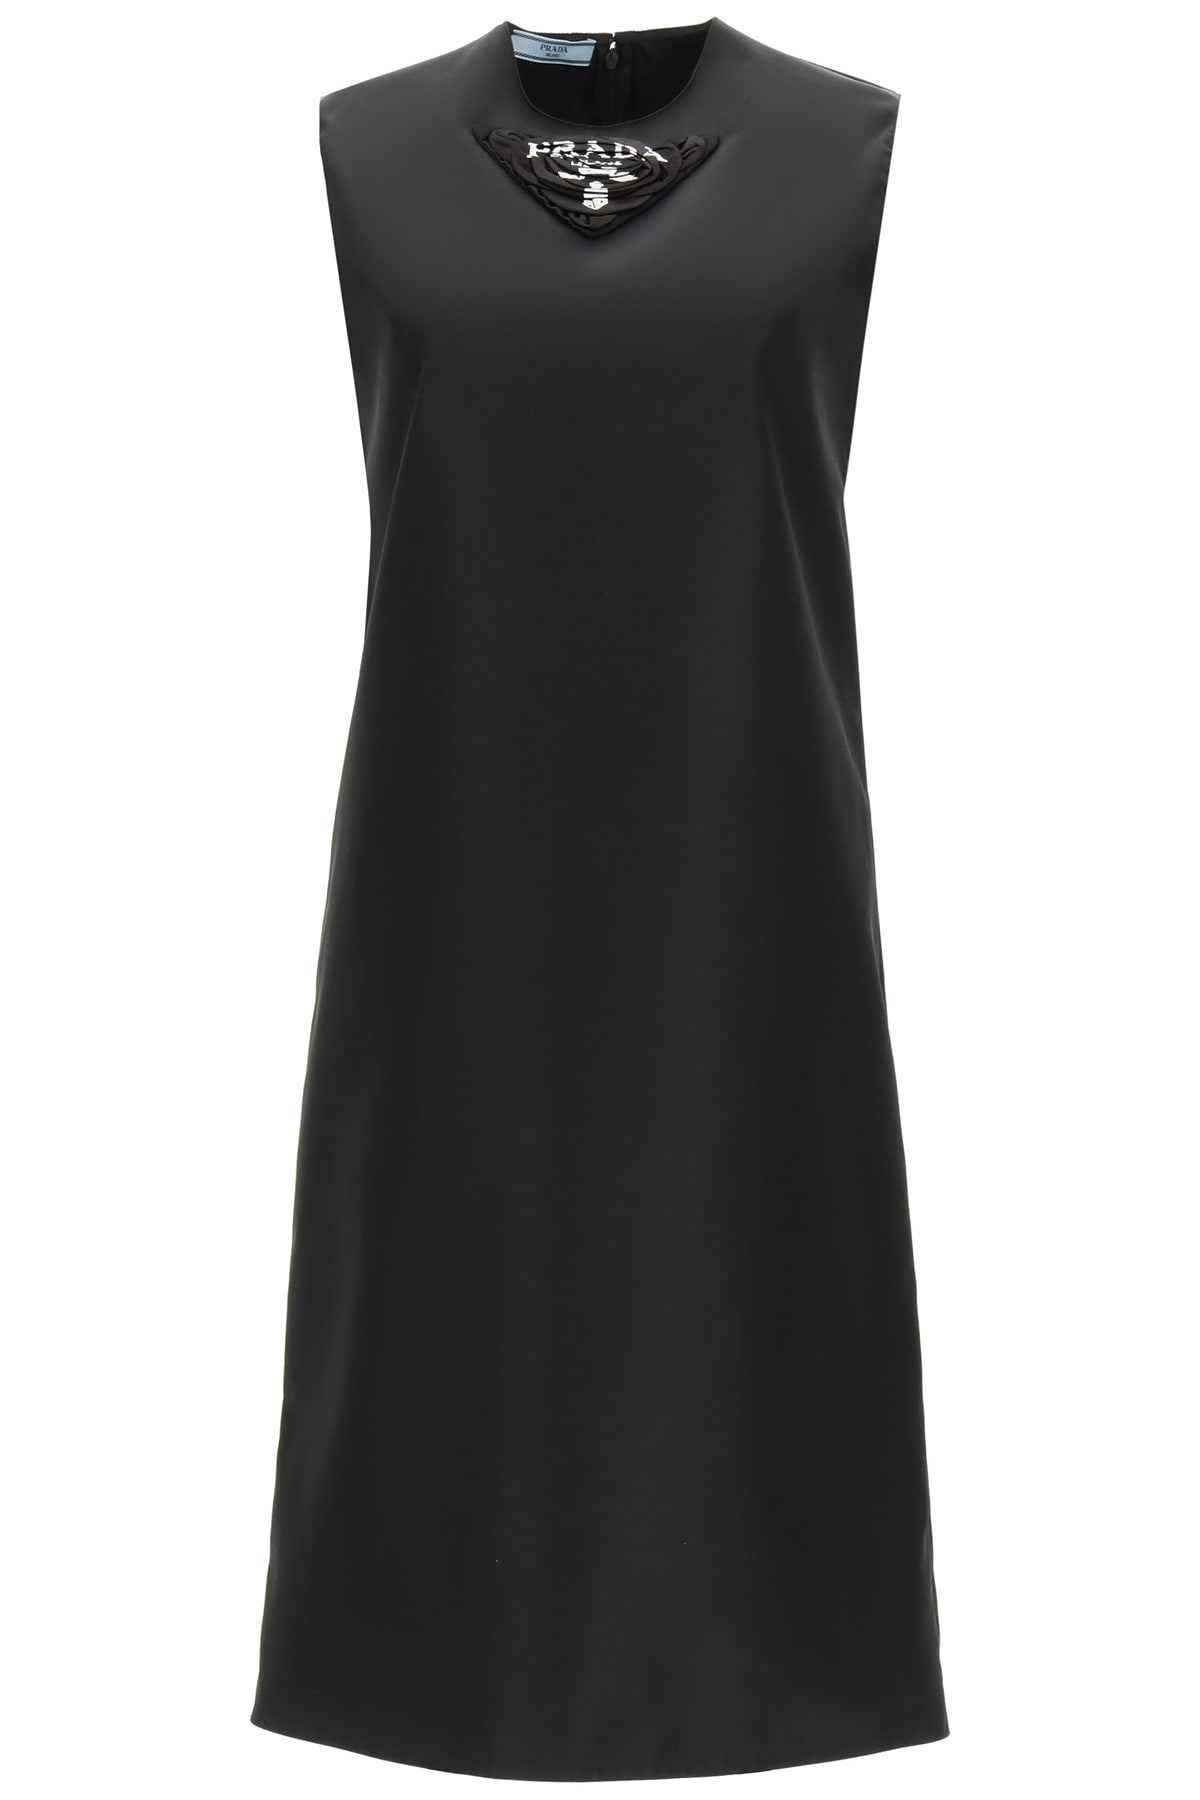 Prada Re-nylon Dress With New Logo